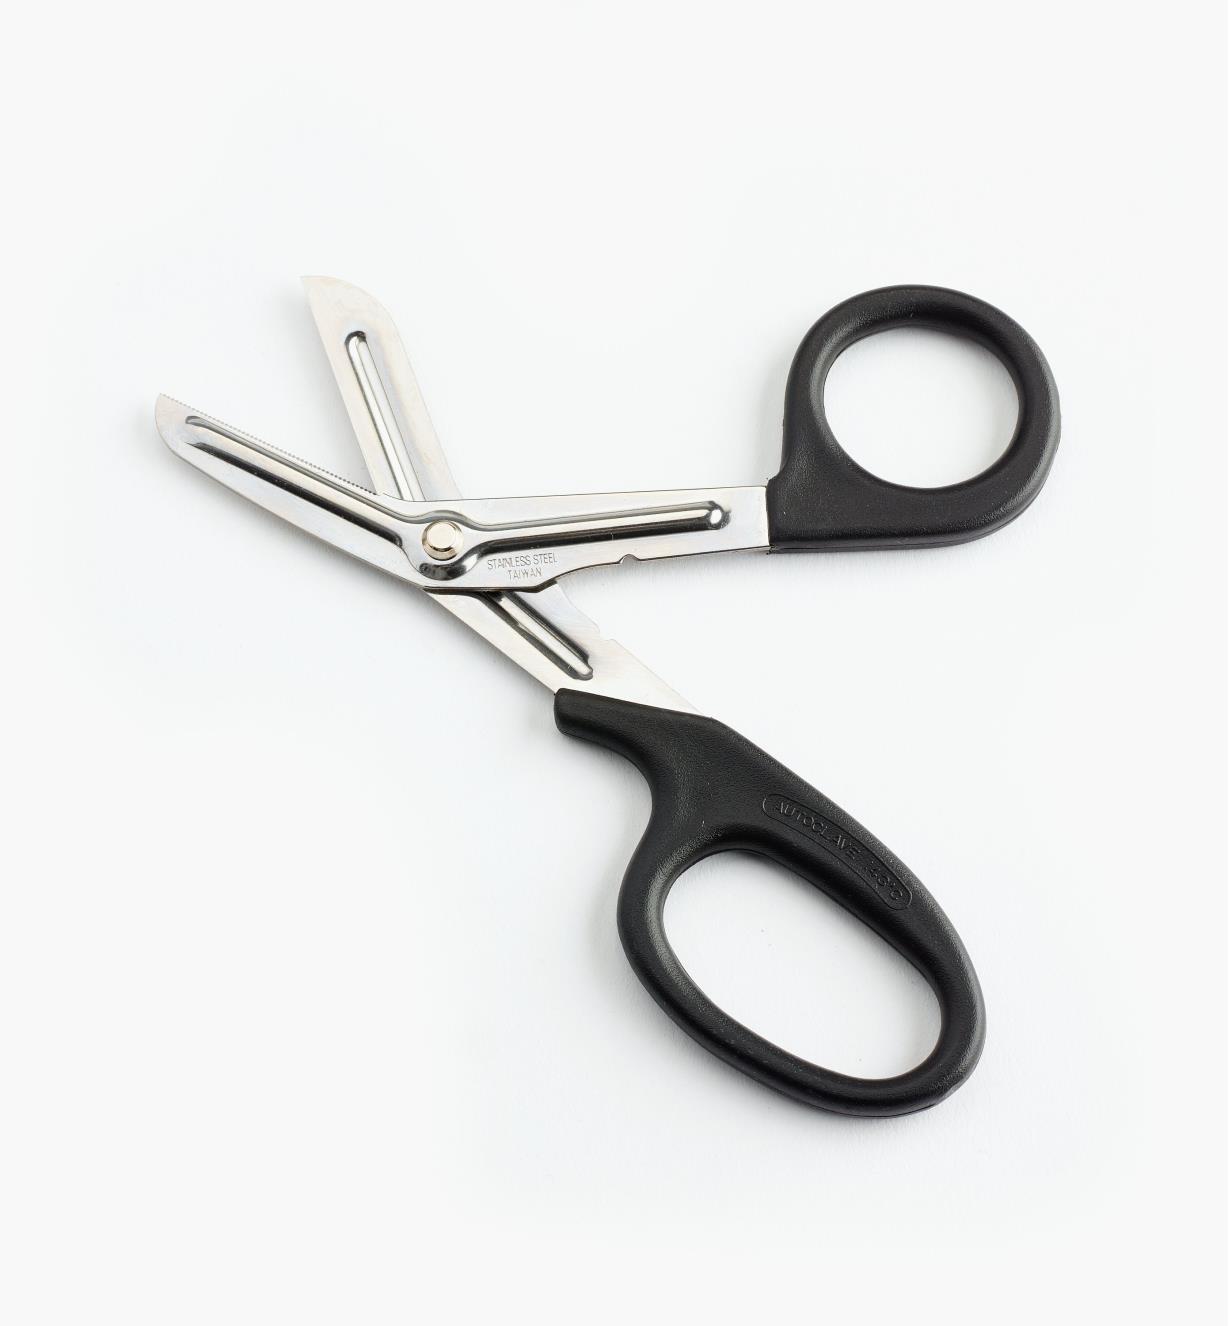 AB522 - Clamshell Scissors